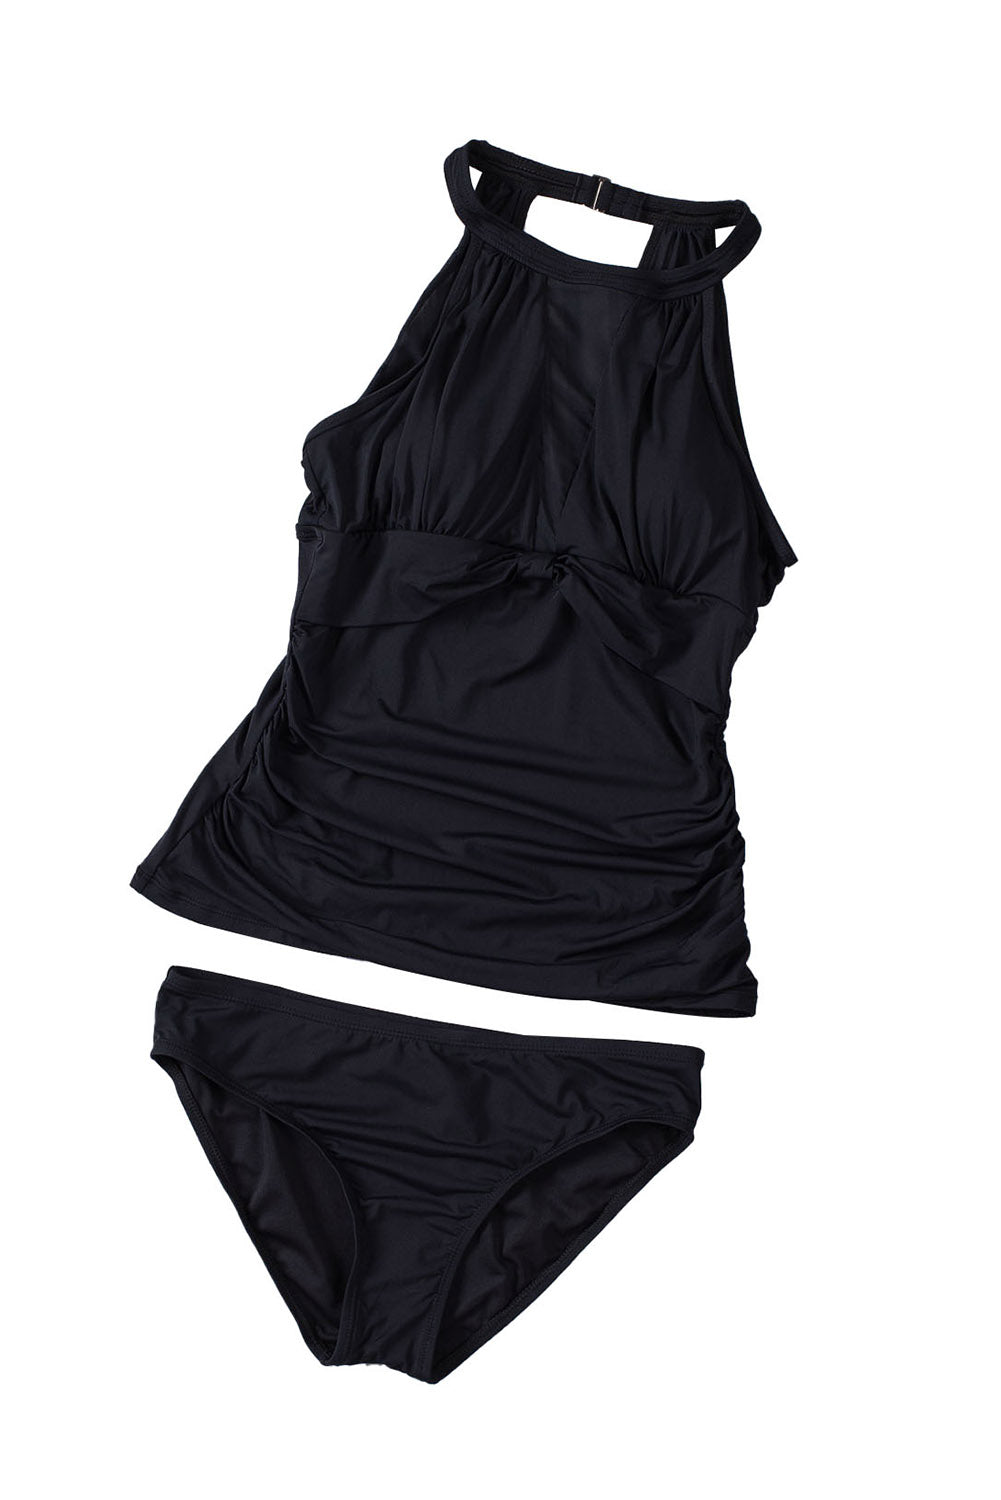 Black Cutout Mesh Ruched Tankini Swimsuit